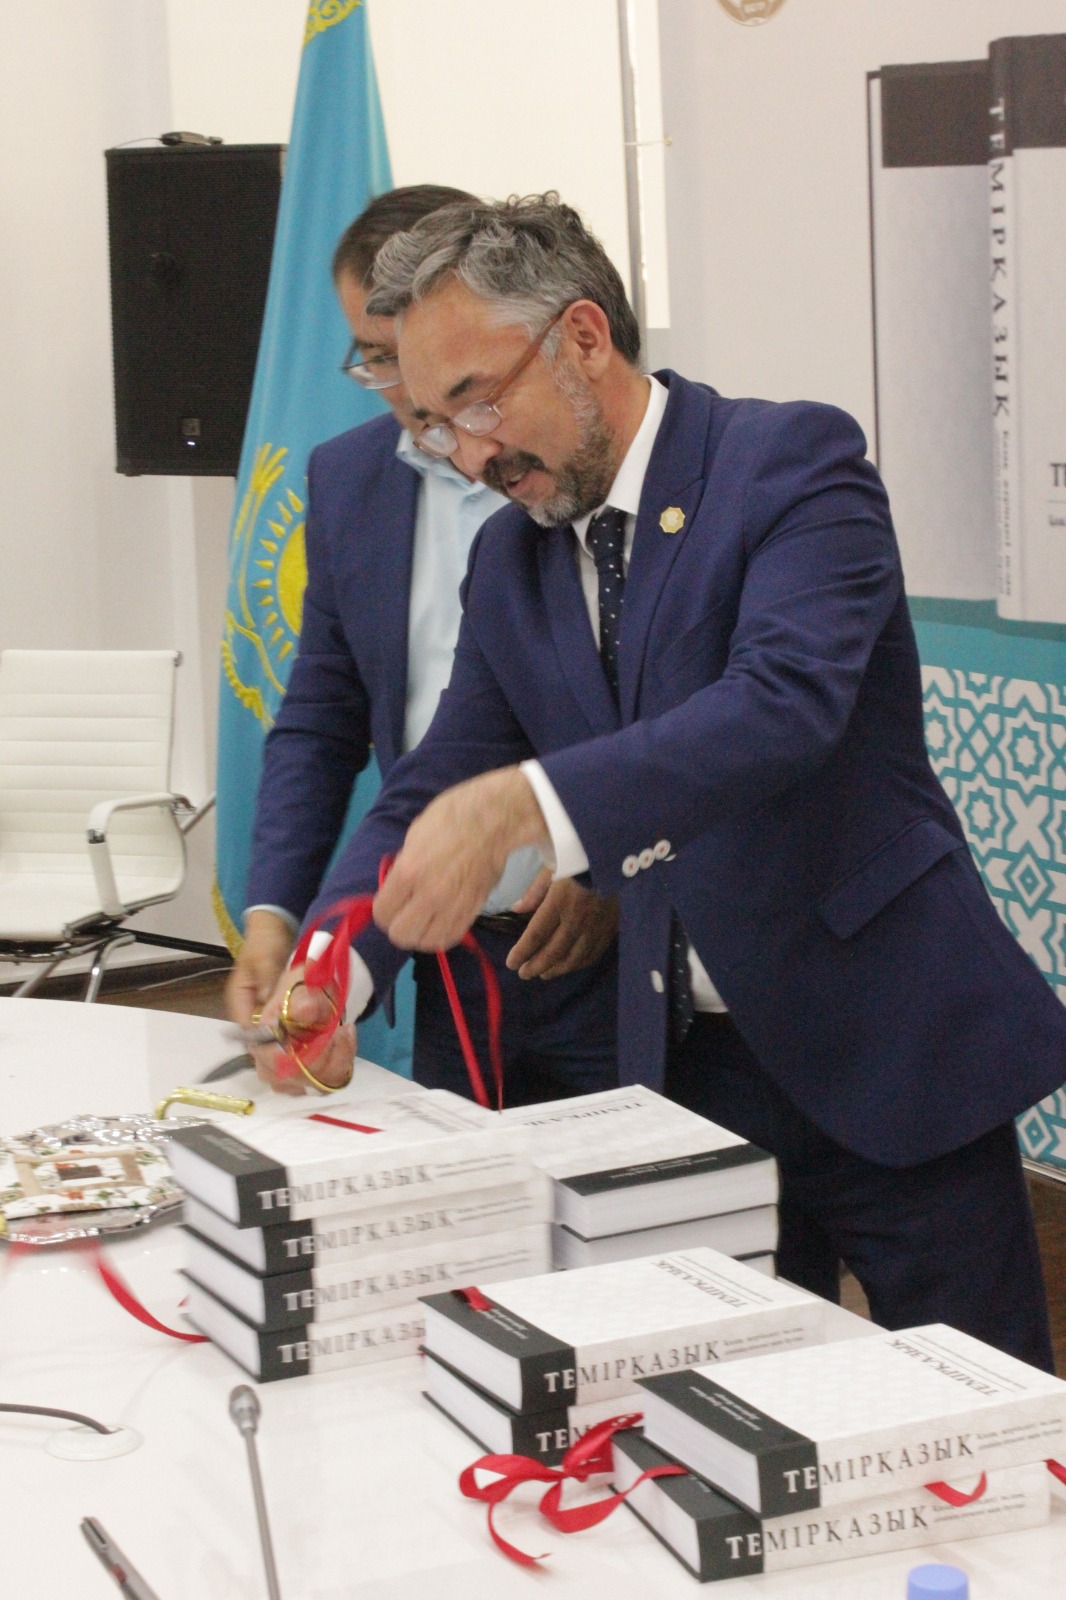 Presentation monograph "Temirkazyk. Kazakh jerindegi islam dininin otkeni men bugini"